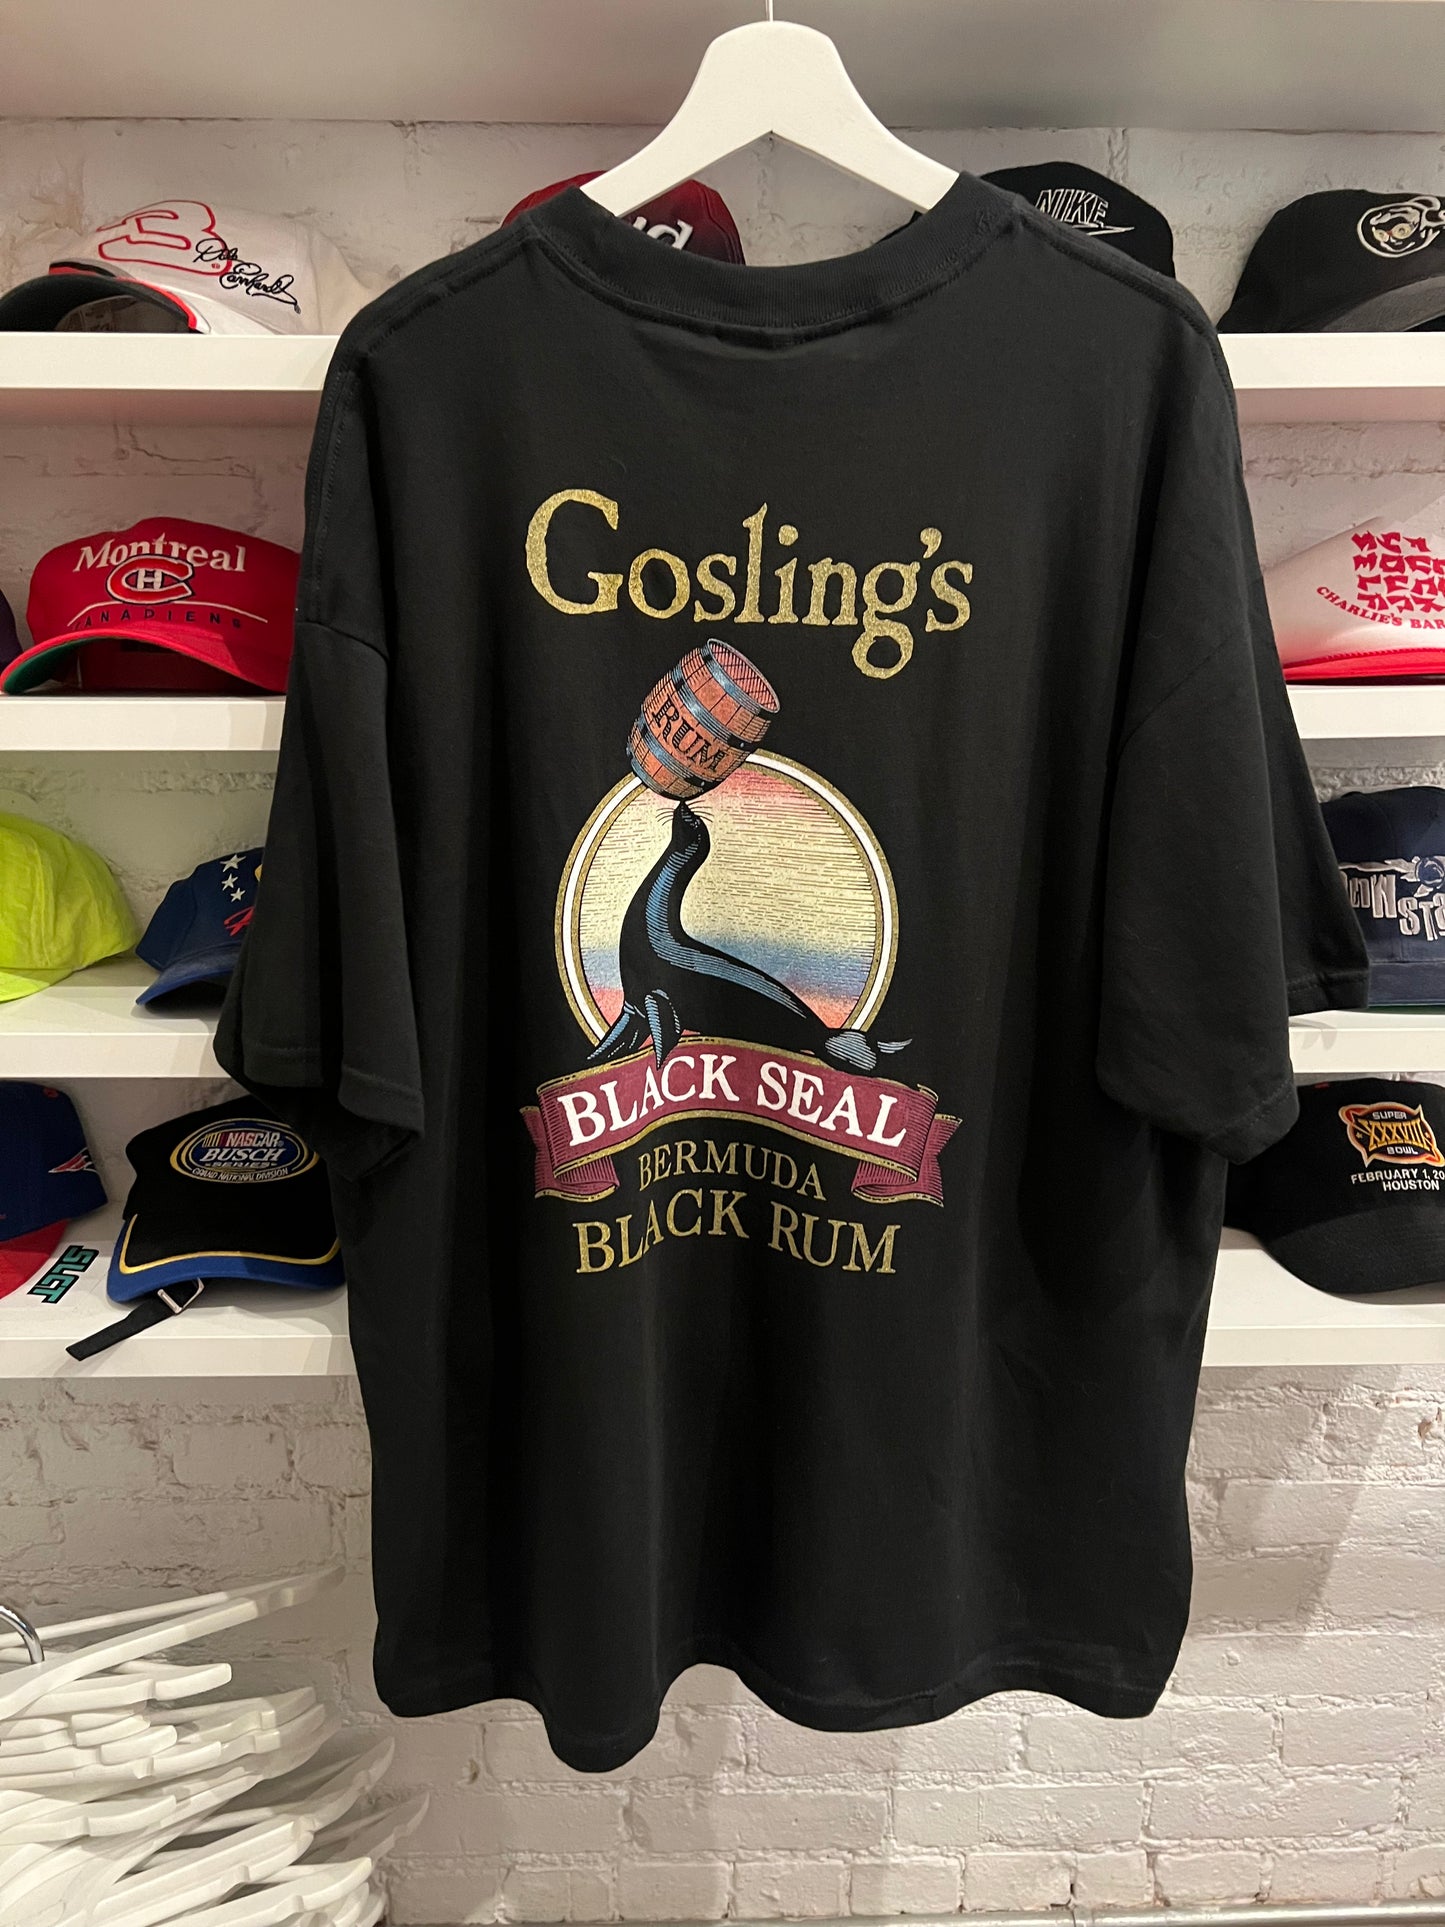 Goslings Black Rum T-shirt size XL